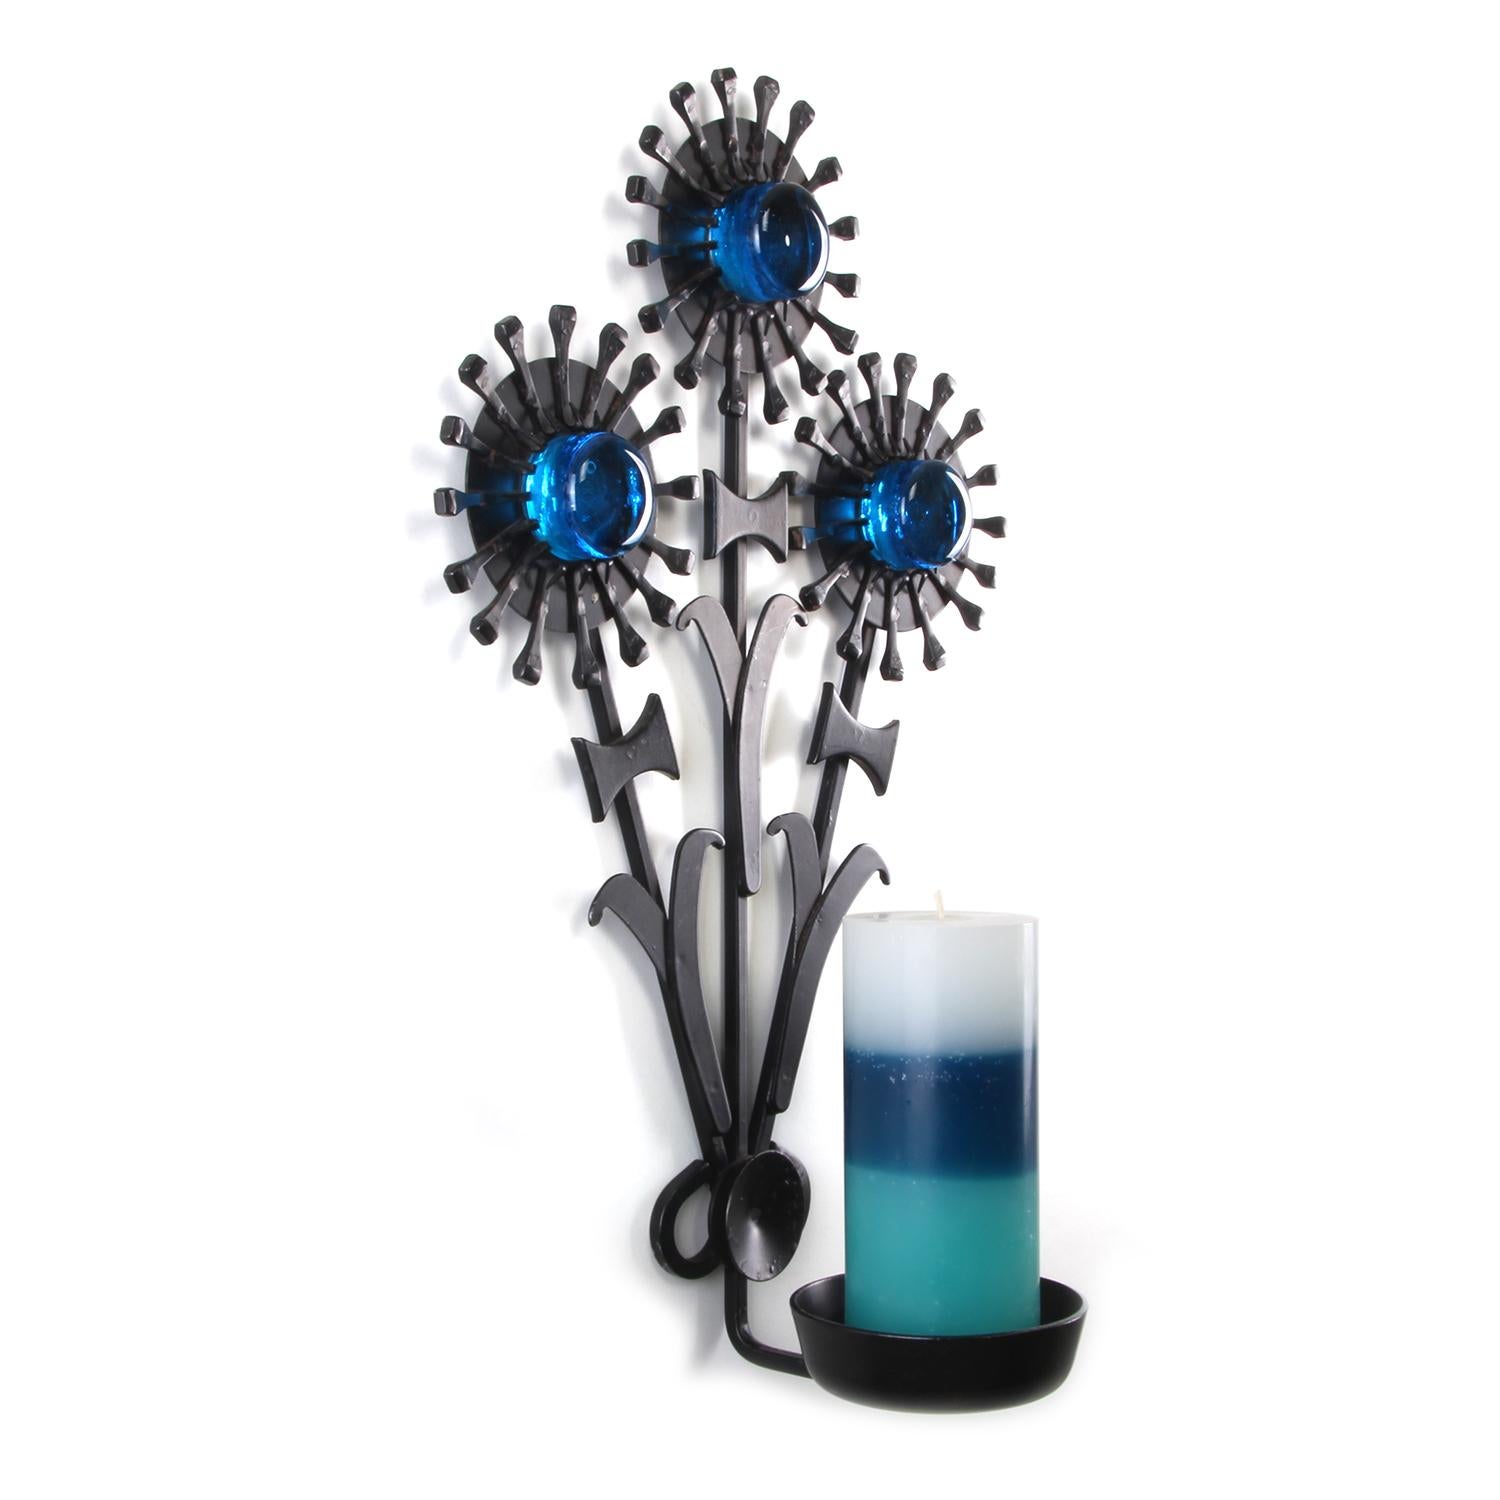 Scandinavian Modern Sconce Black Iron Candleholder with Blue Glass by Danish Dantoft, 1960s For Sale